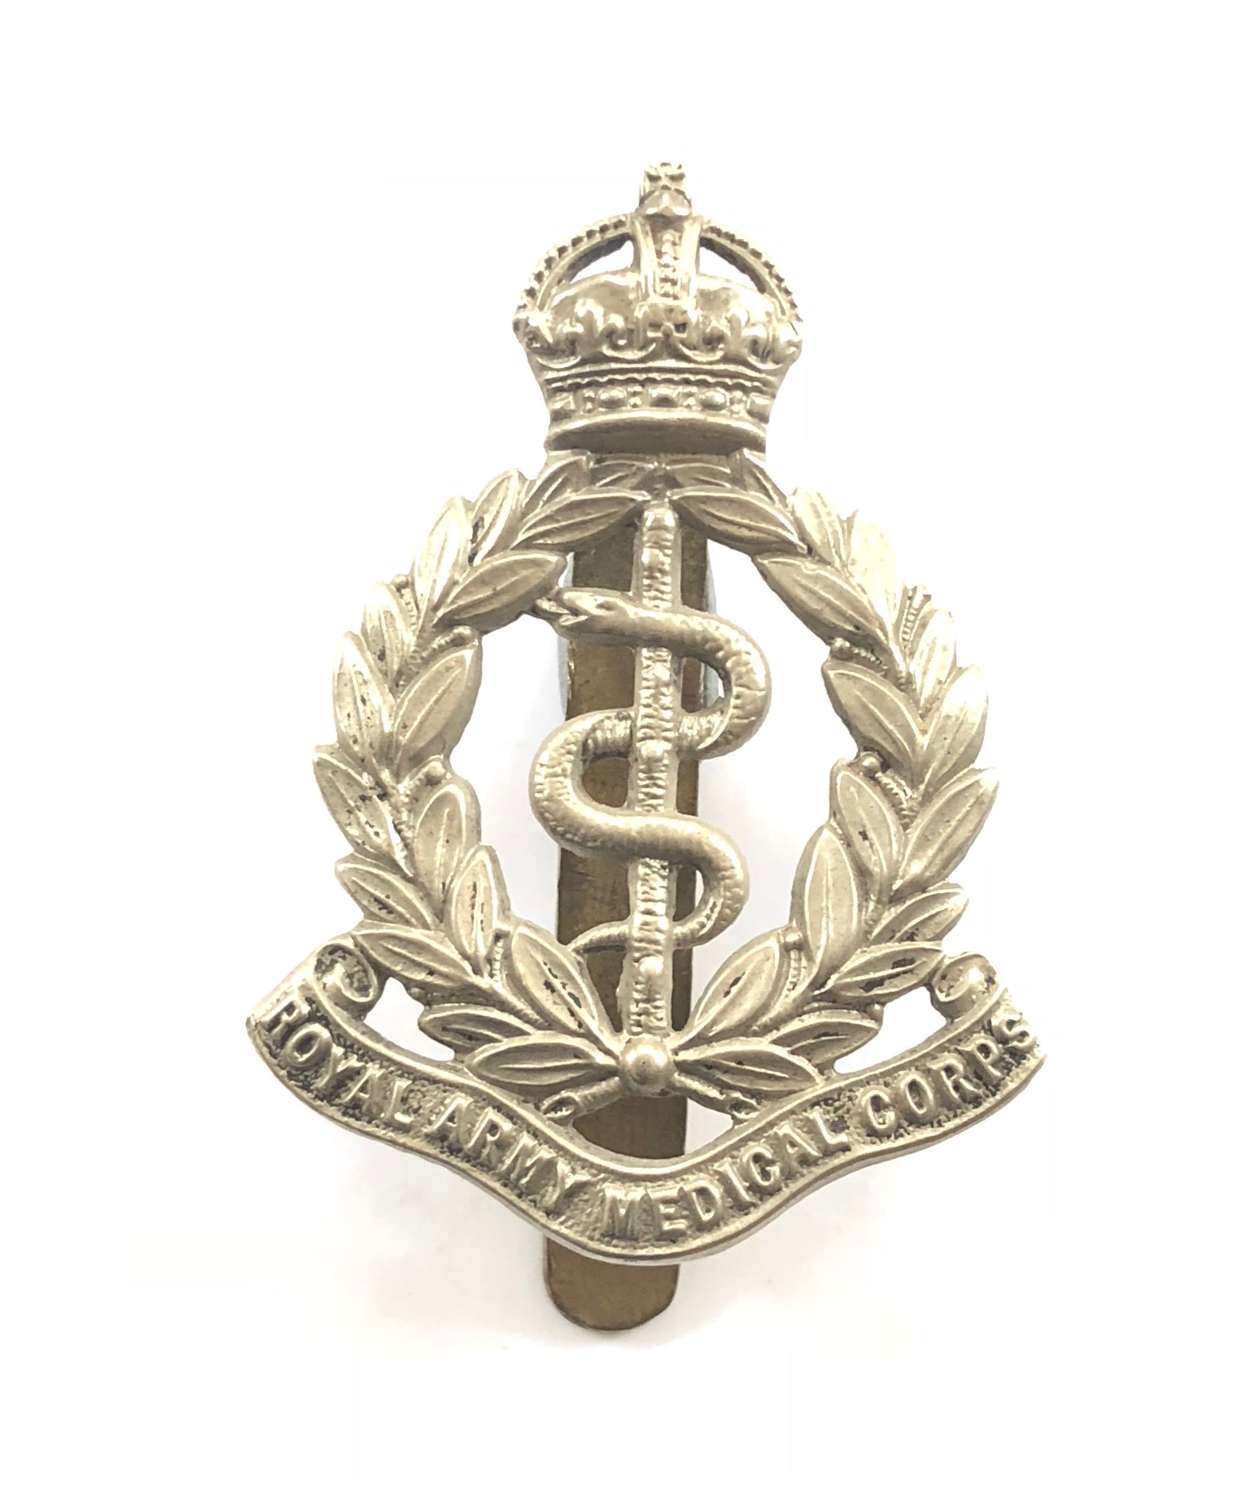 Royal Army Medical Corps white metal cap badge